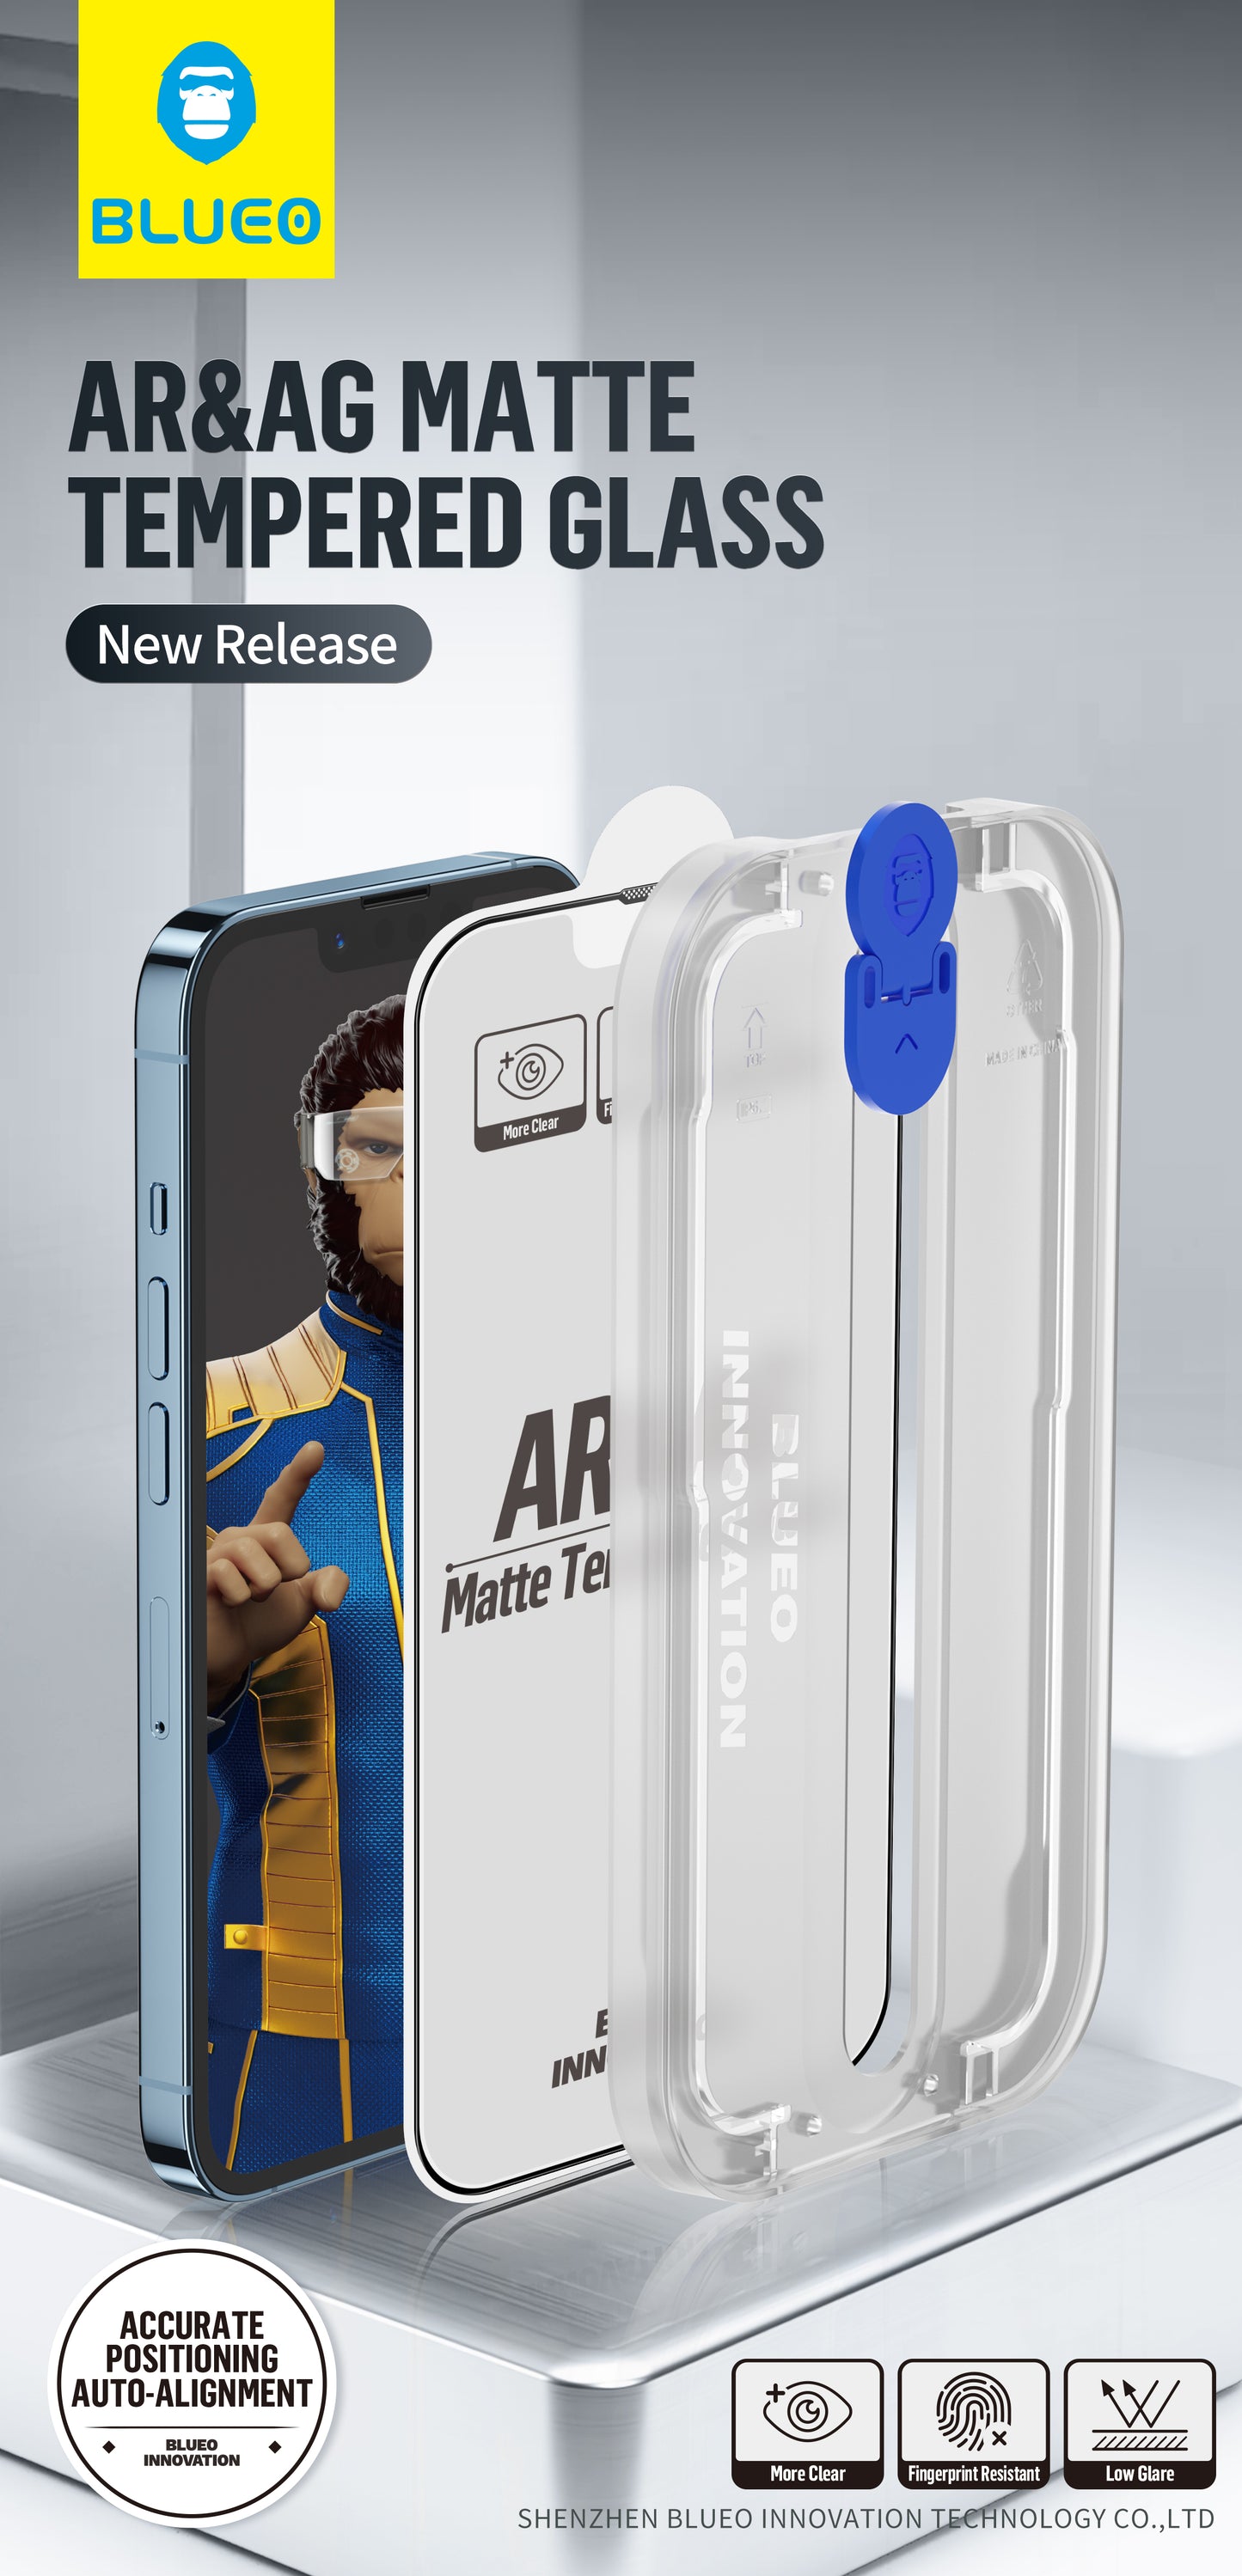 BlueO AR&AG Matte Glass with Applicator